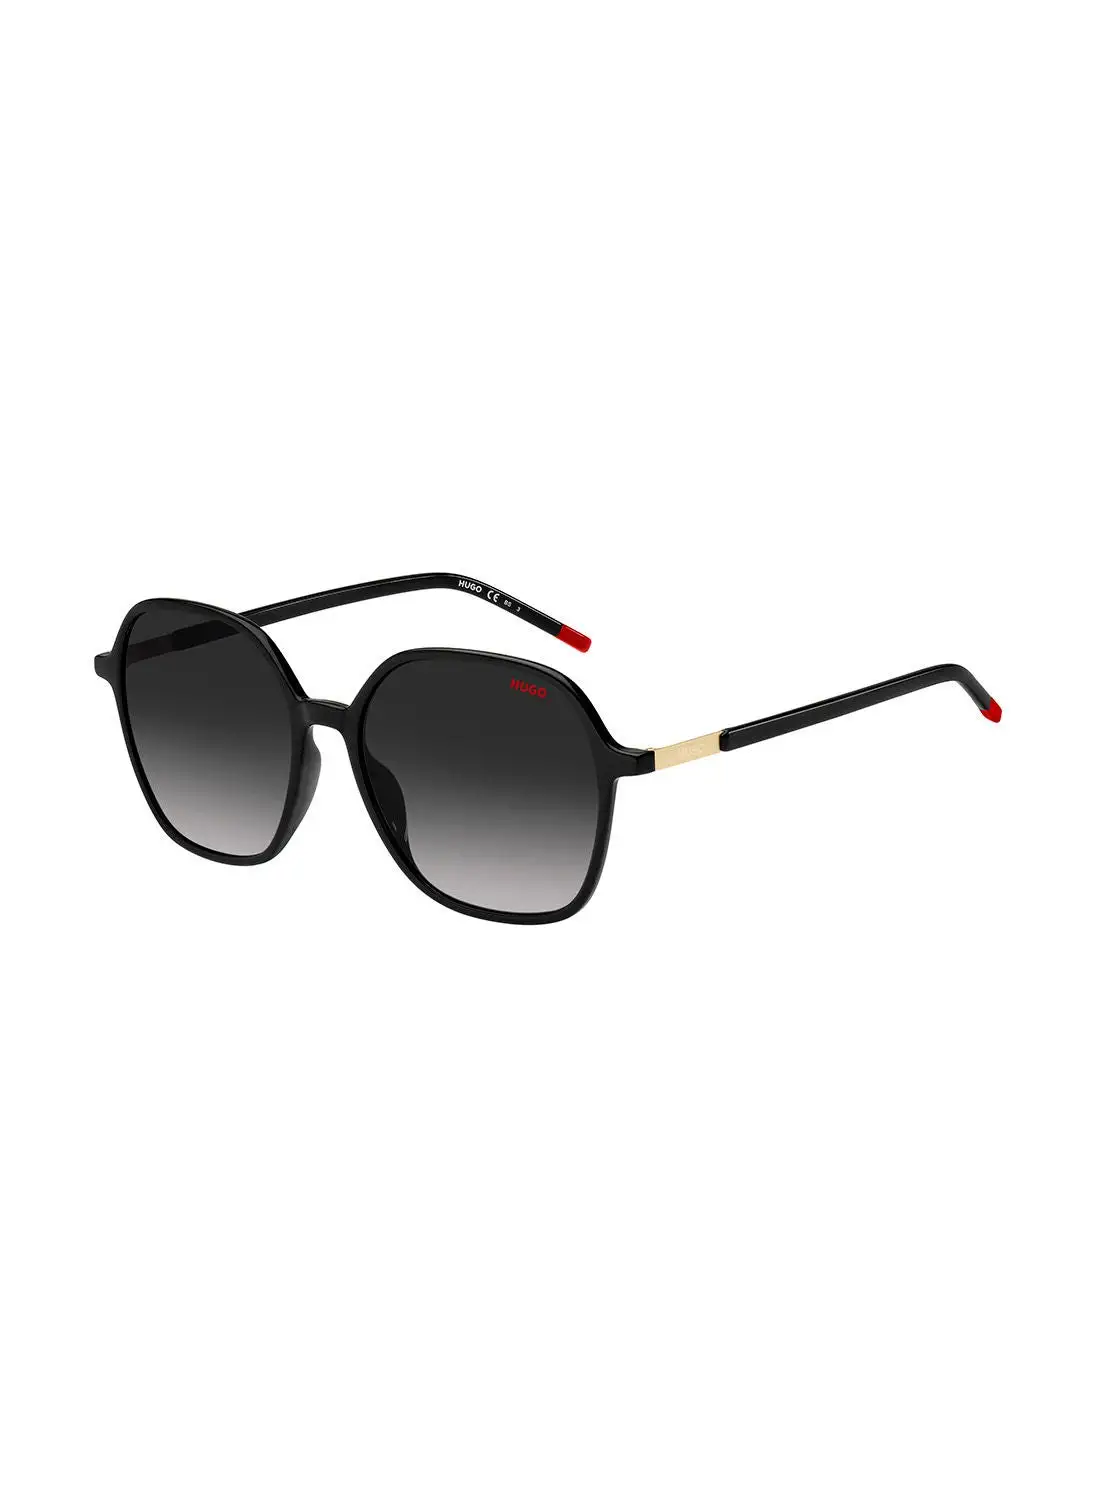 HUGO نظارة شمسية مثمنة للحماية من الأشعة فوق البنفسجية للنساء - Hg 1236/S أسود 55 - مقاس العدسة: 55 ملم